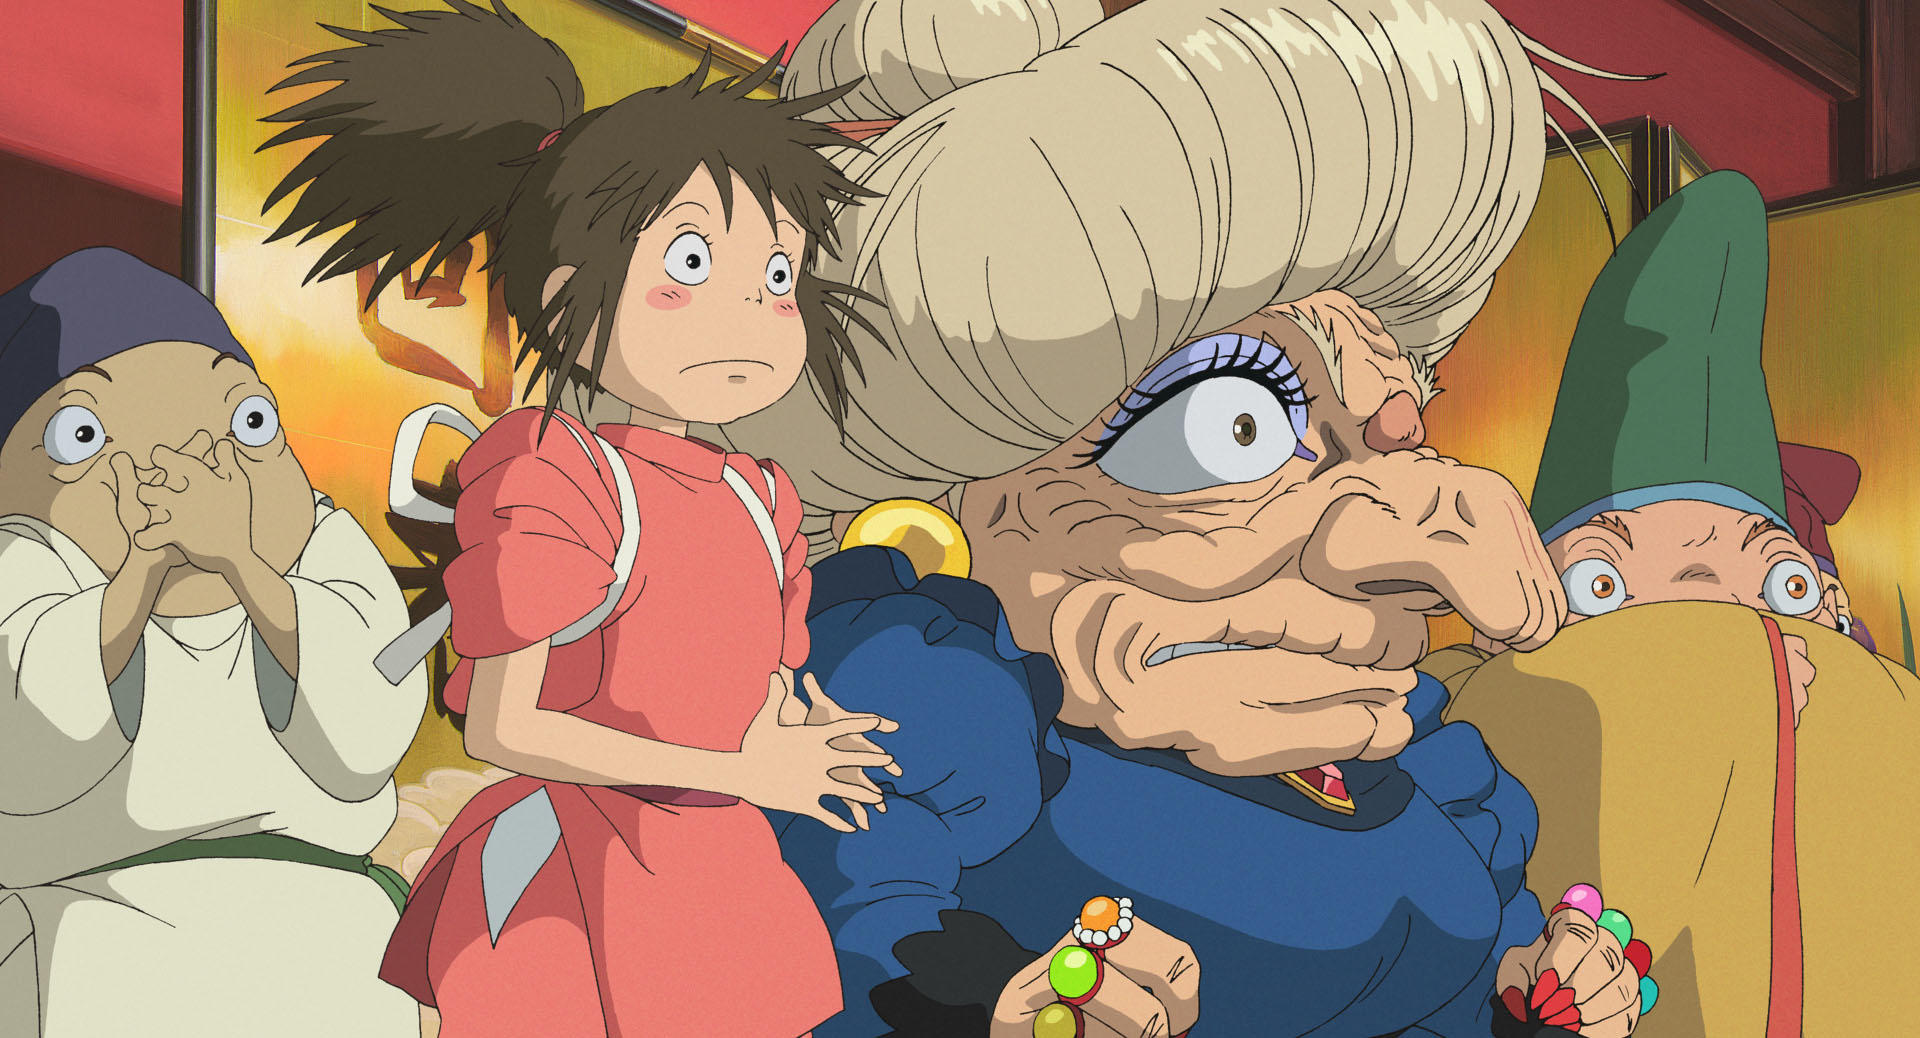 Ghibli director Hayao Miyazaki shares secret to help improve your anime art  skills | SoraNews24 -Japan News-